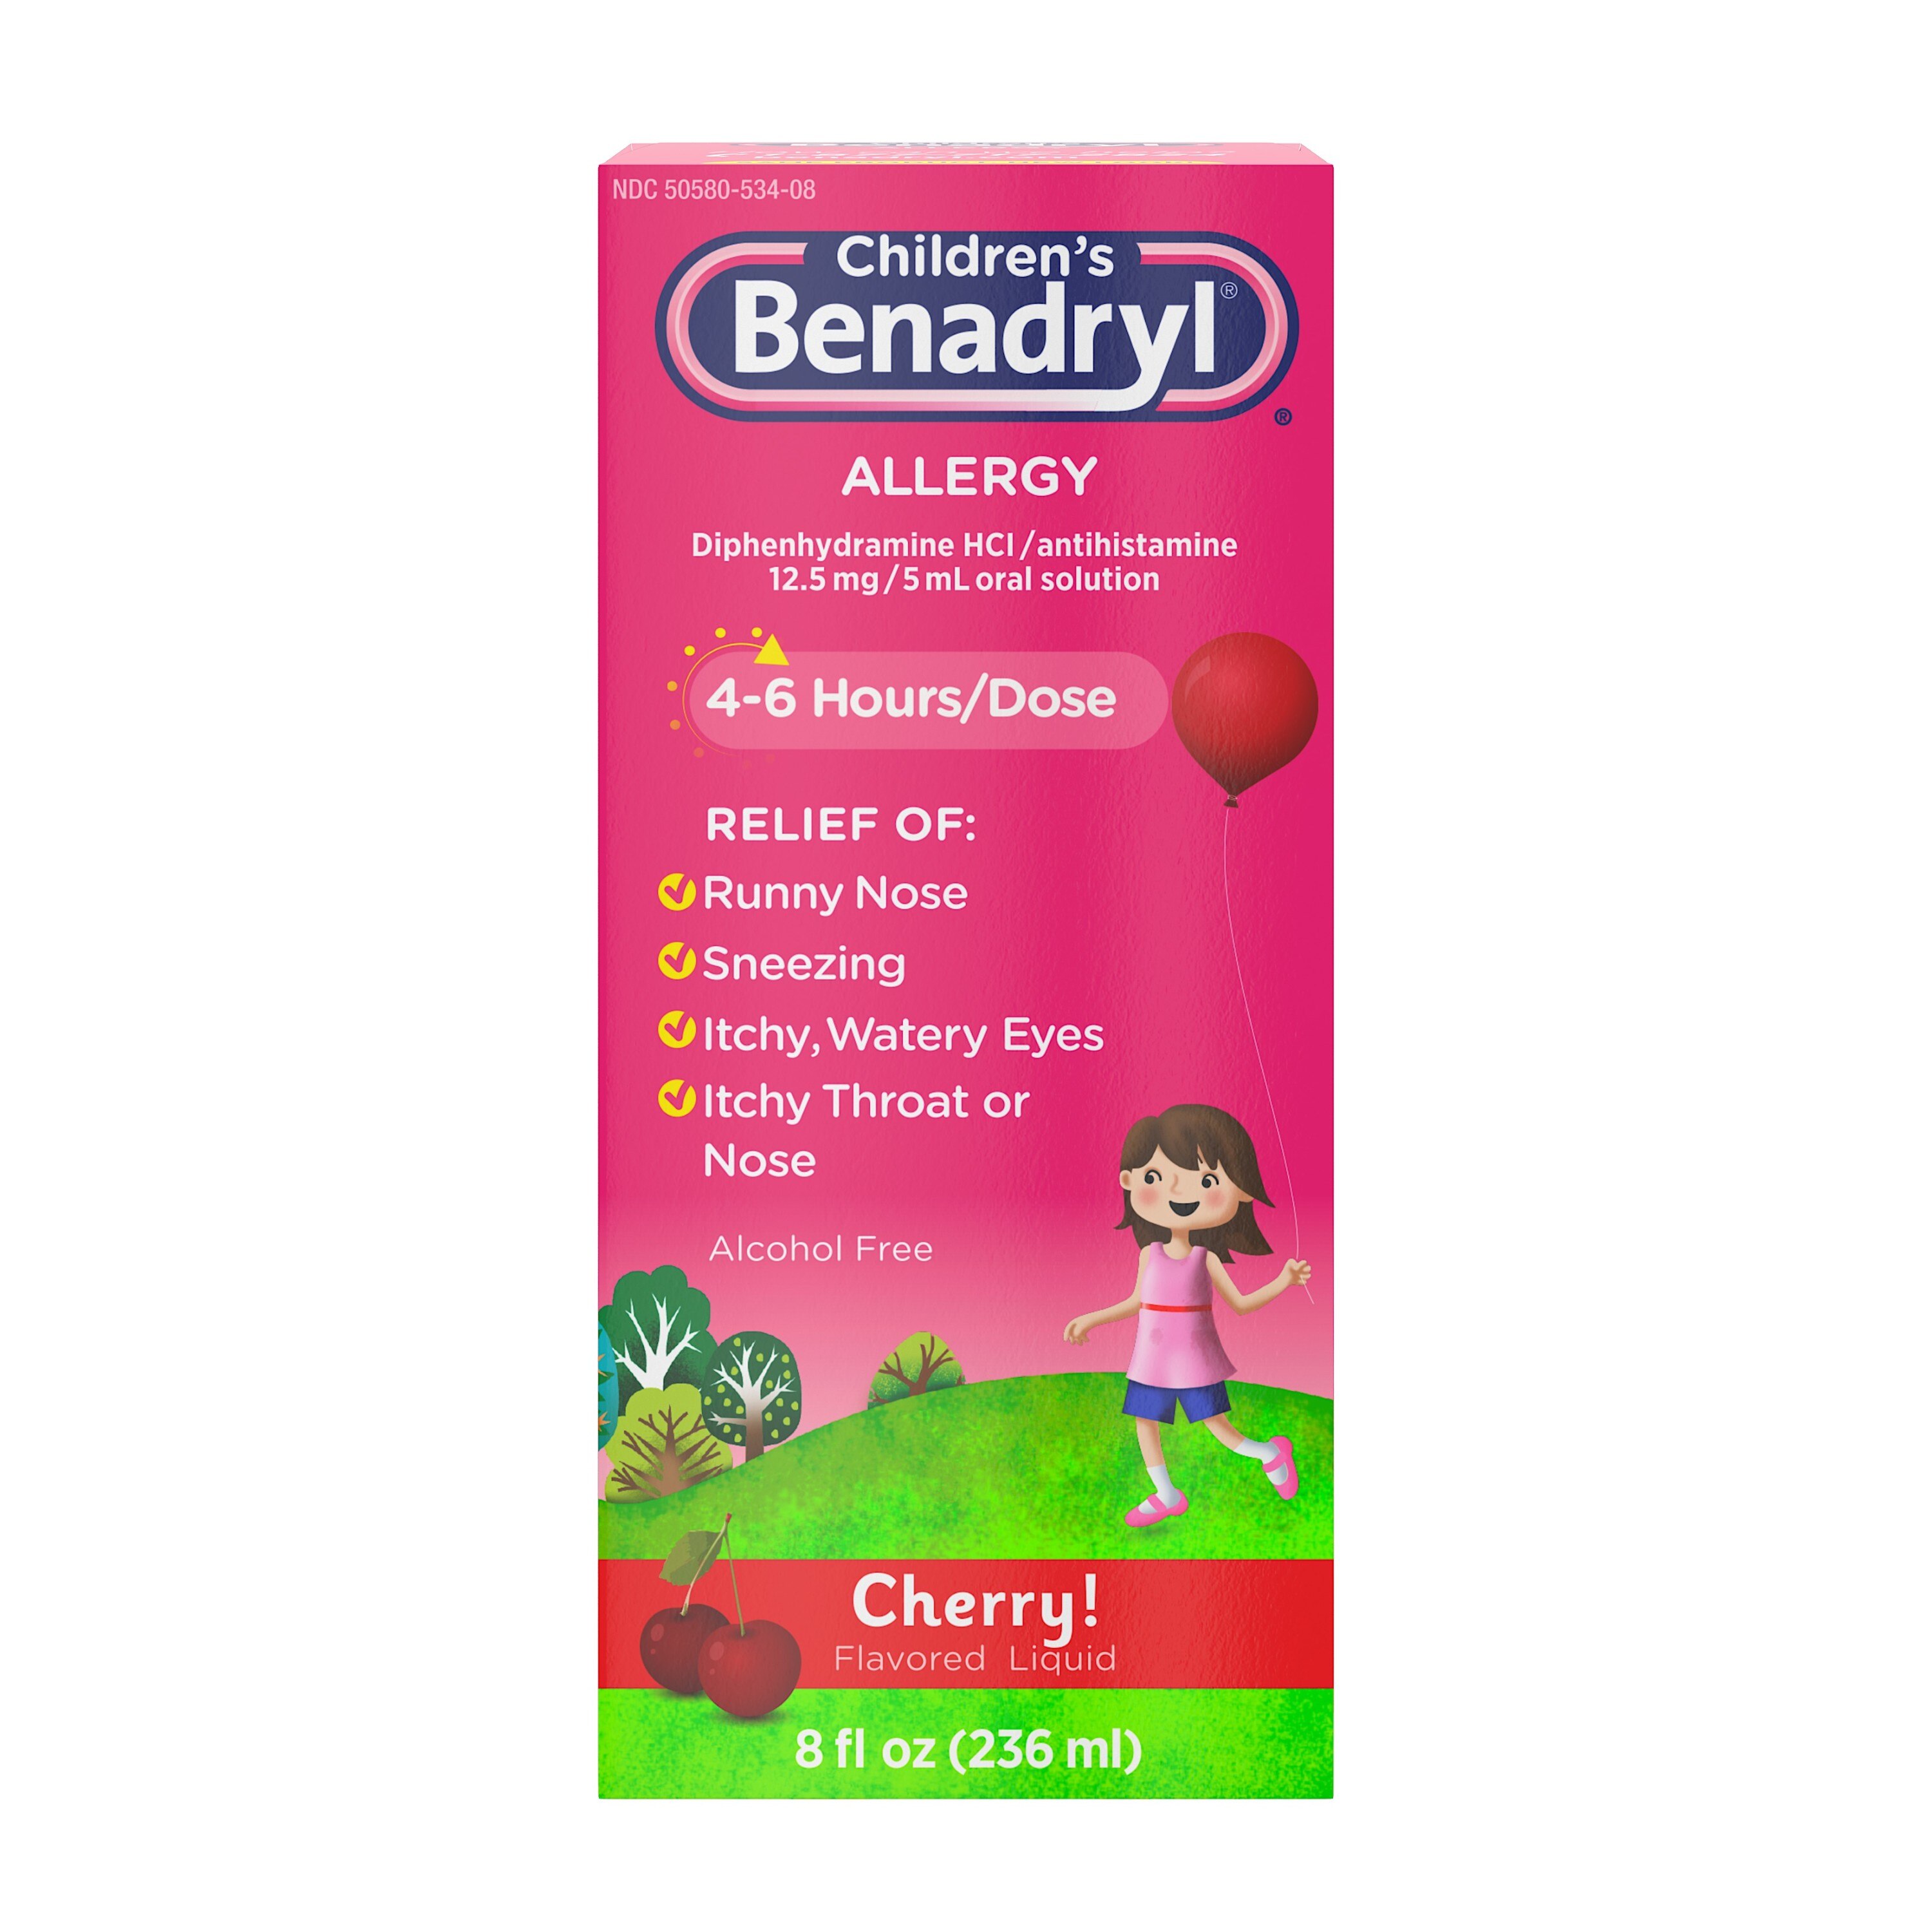 Children's Benadryl Antihistamine Allergy Liquid, Cherry